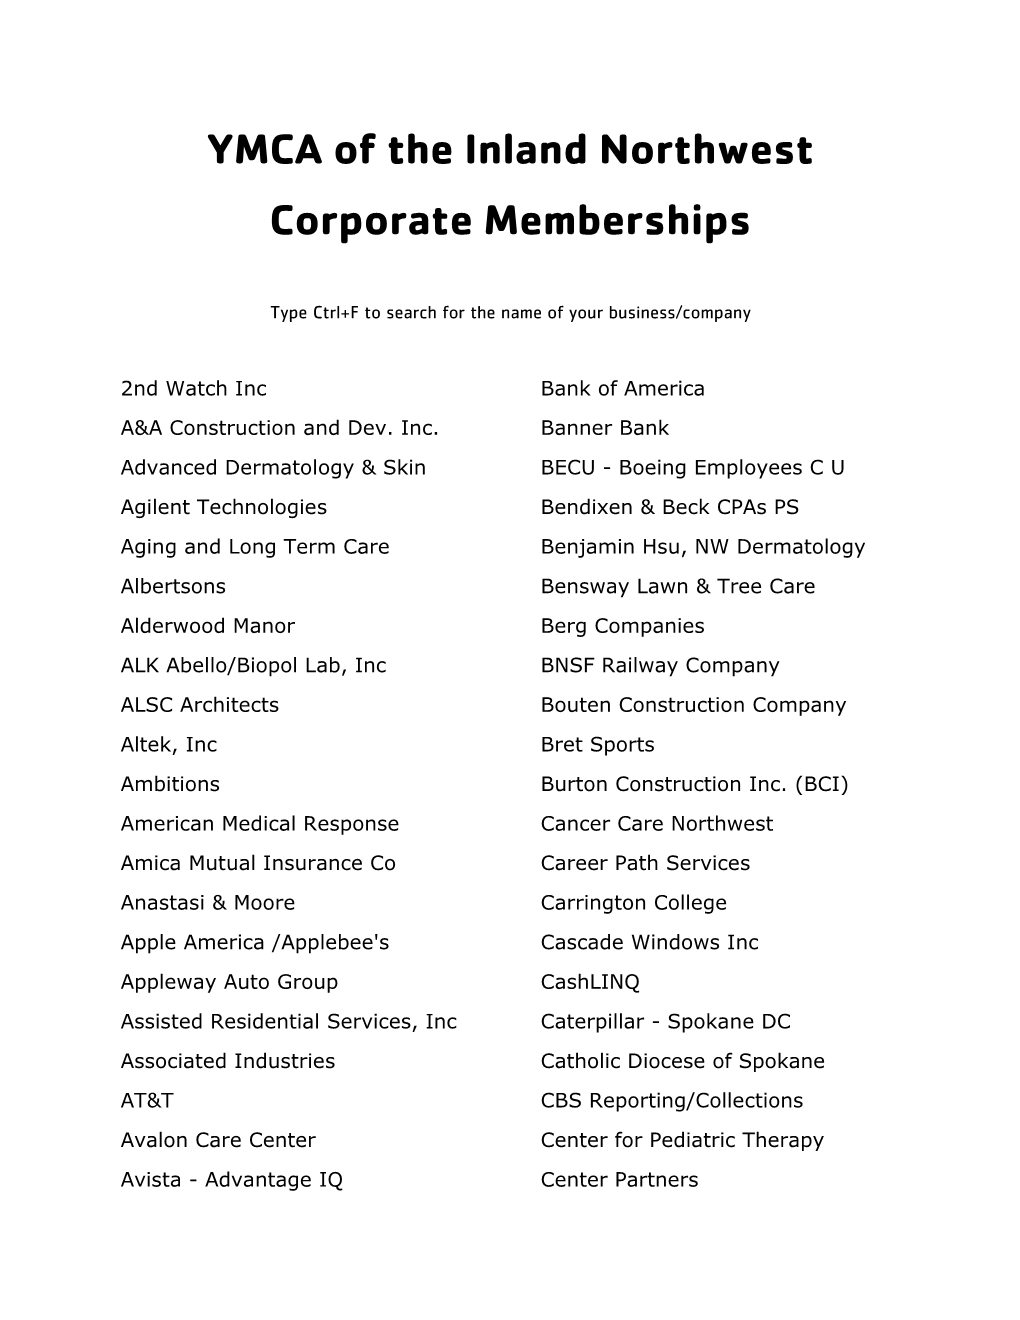 YMCA of the Inland Northwest Corporate Memberships